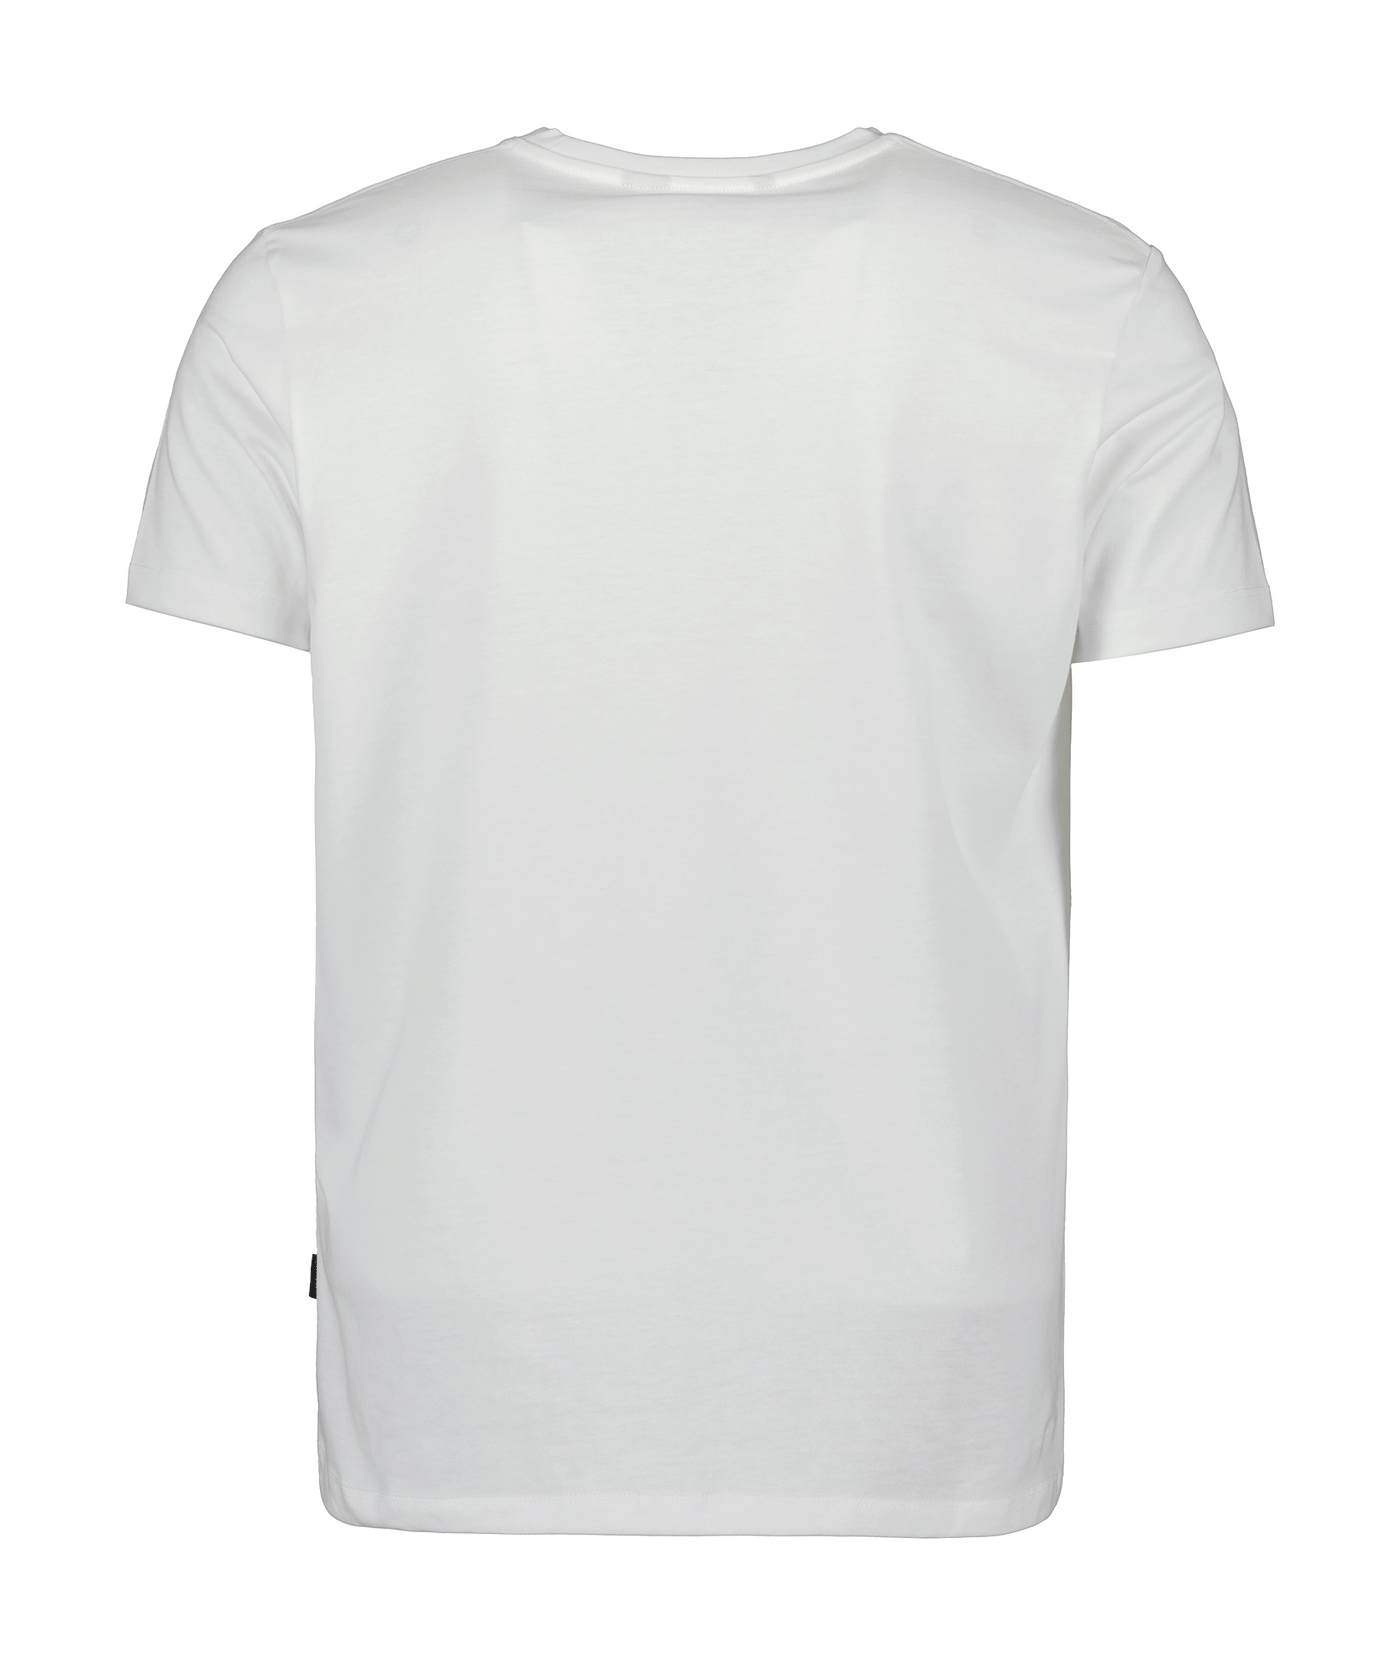 Airforce - Tbm0888 - Basic T-shirt - 100/901 White/true Black